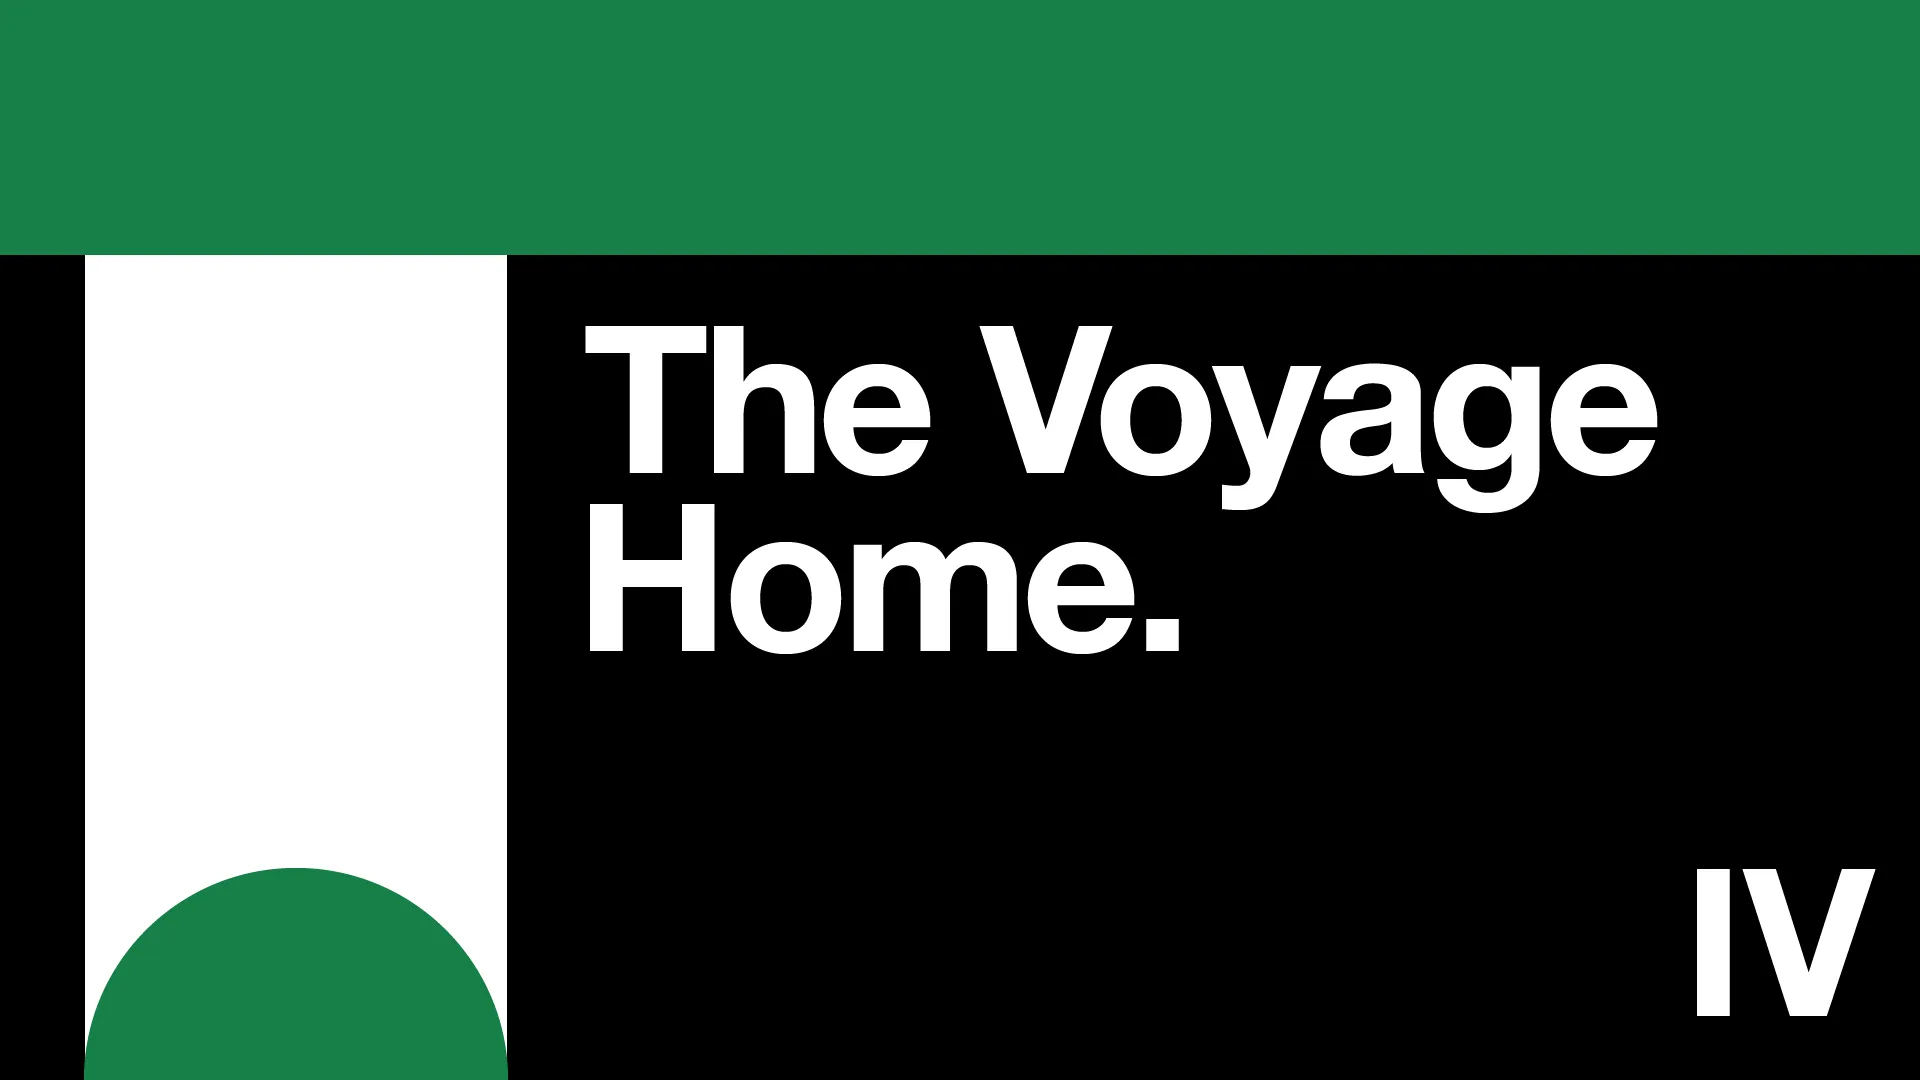 Poster for Star Trek IV: The Voyage Home.